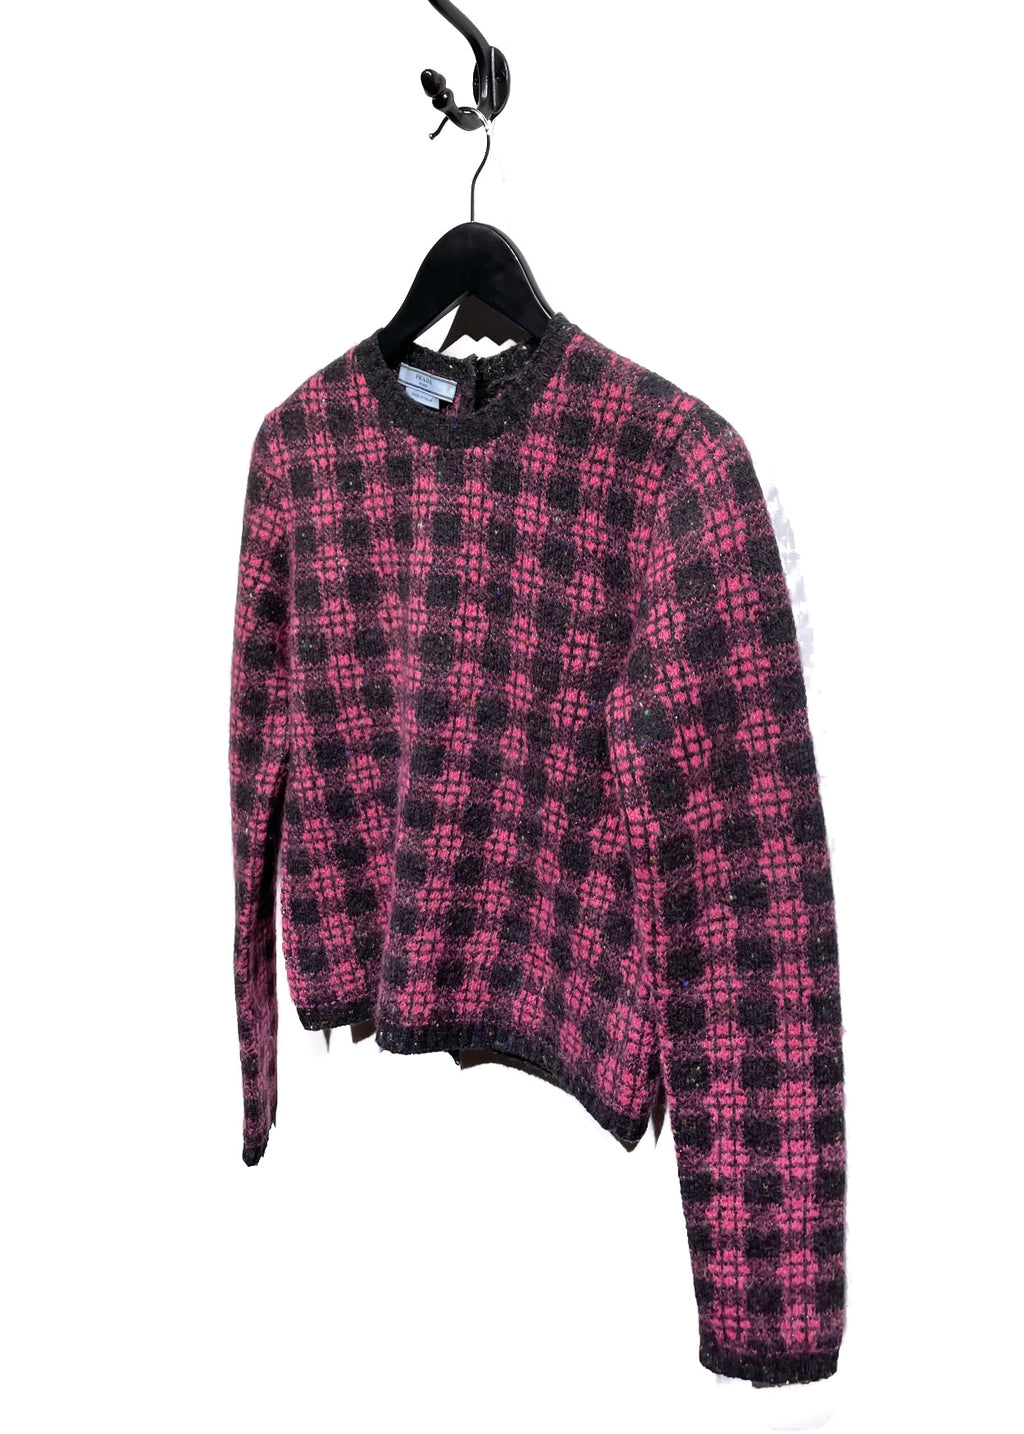 Prada Pink And Black Plaid Wool-Blend Sweater